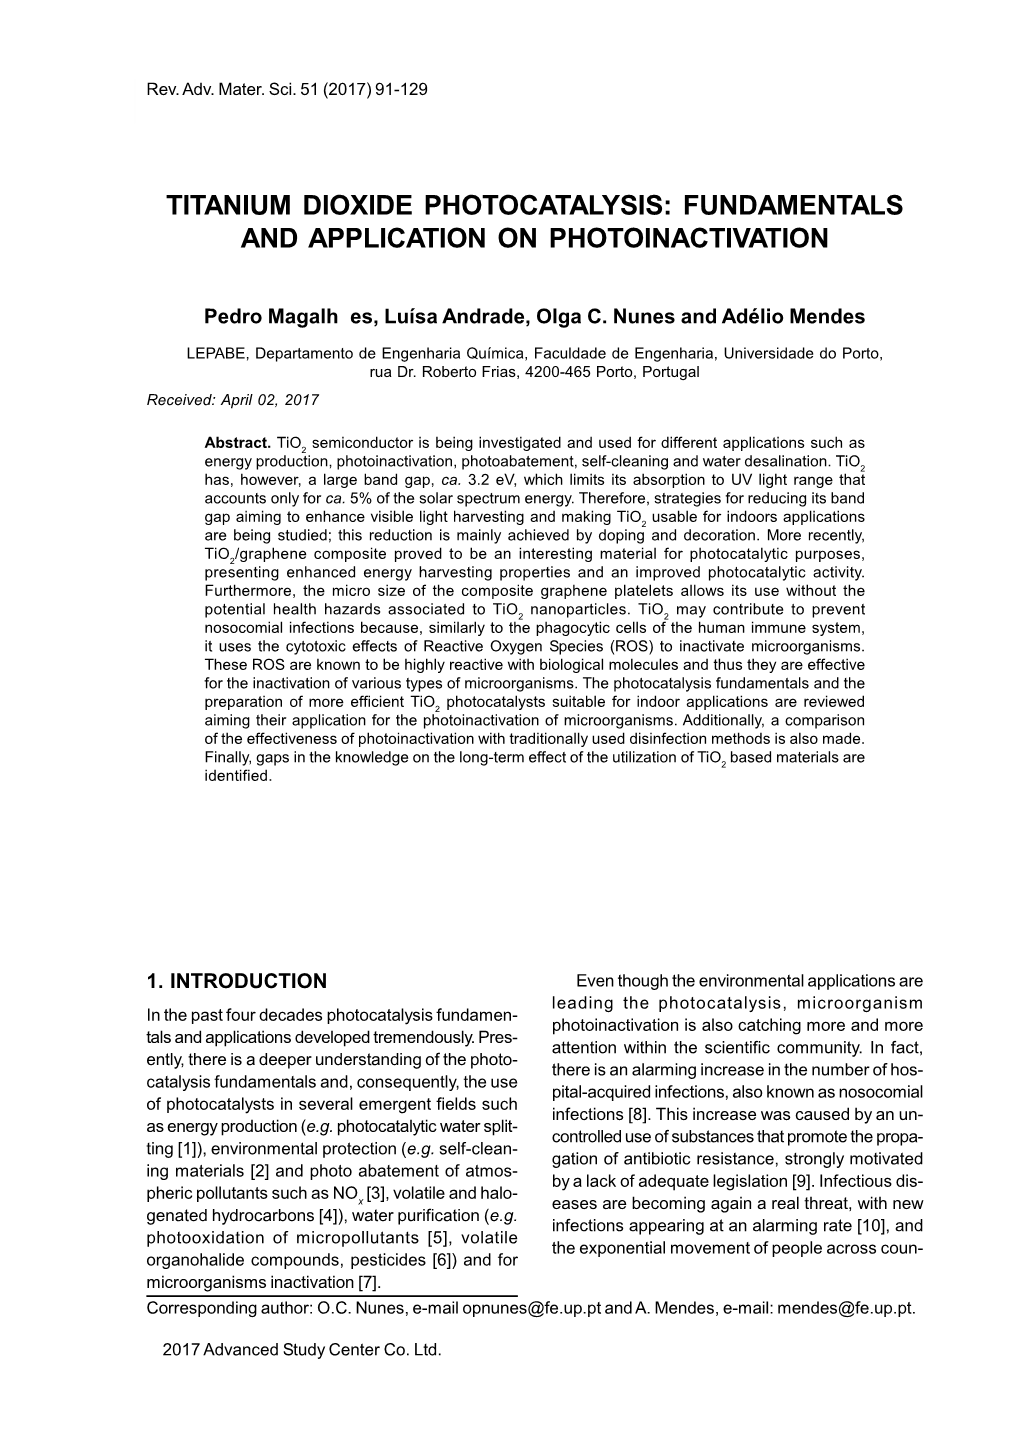 Titanium Dioxide Photocatalysis: Fundamentals and Application on Photoinactivation